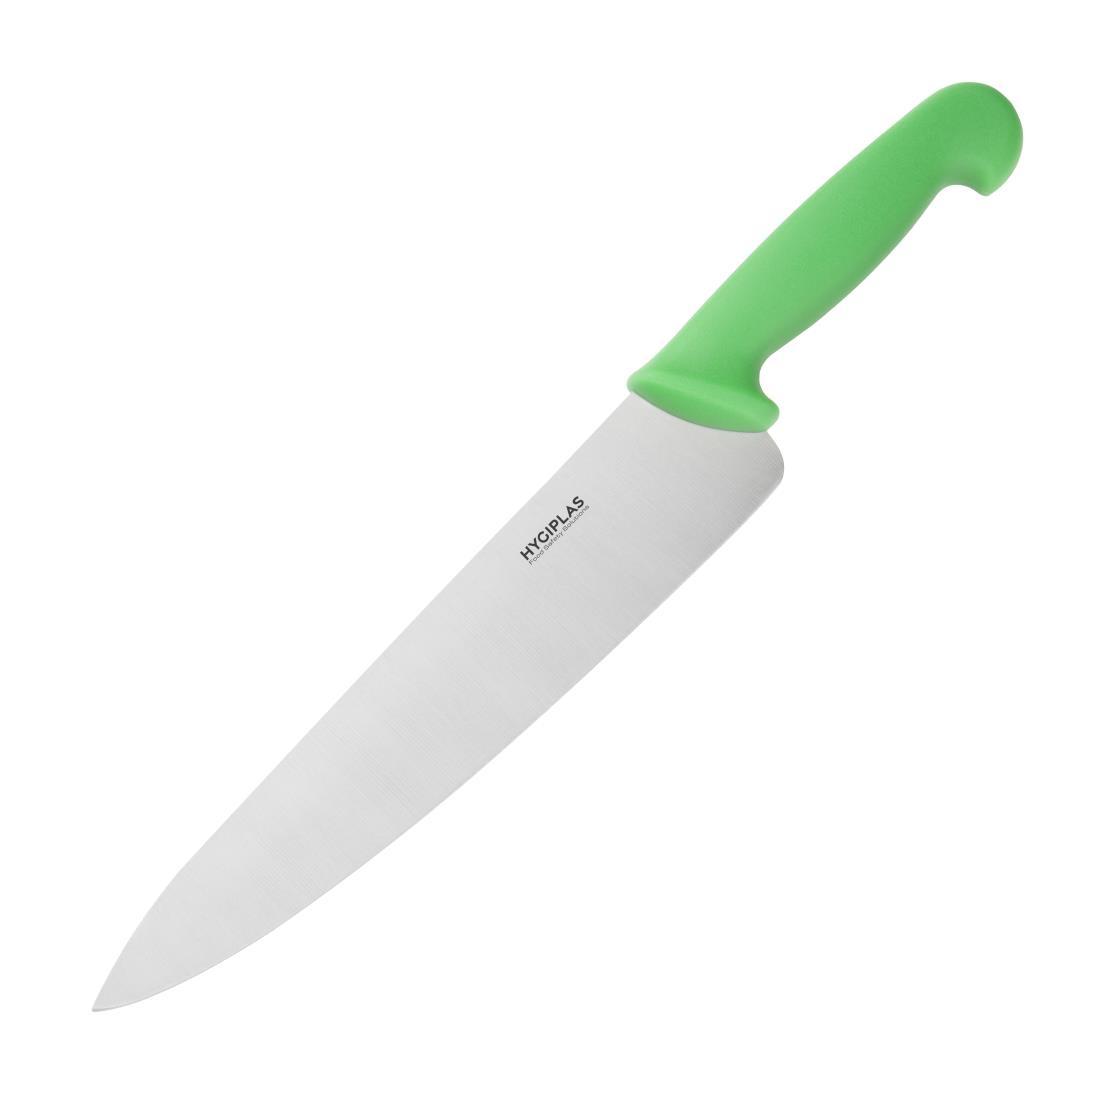 Hygiplas Chef Knife Green 25.5cm - C868  - 1